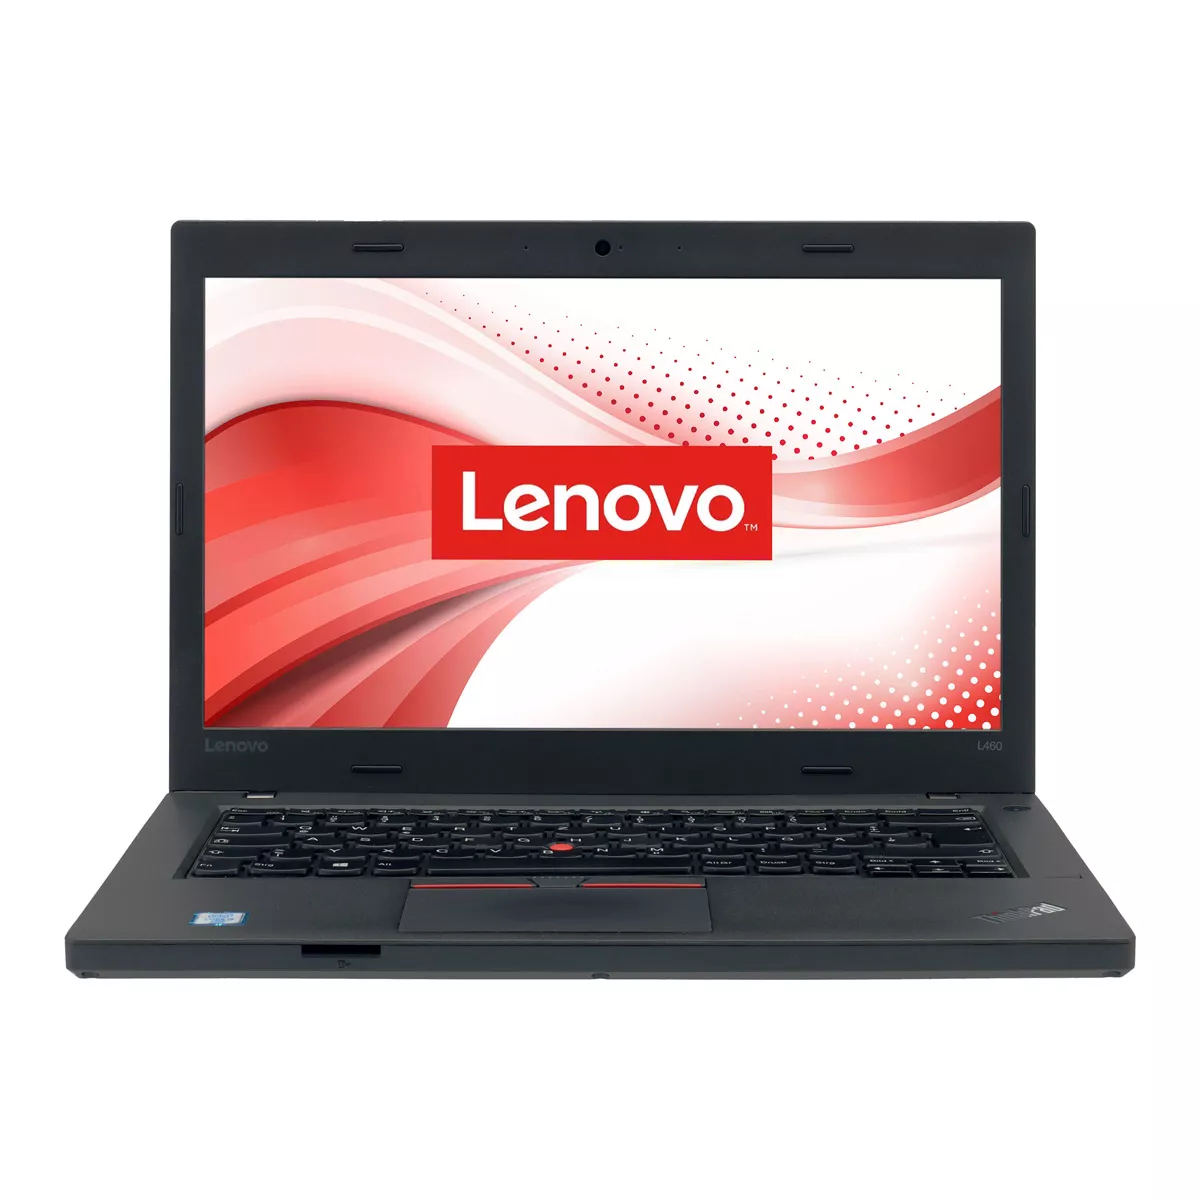 Lenovo ThinkPad L460 Core i5 6300U Full-HD 240 GB SSD Webcam A